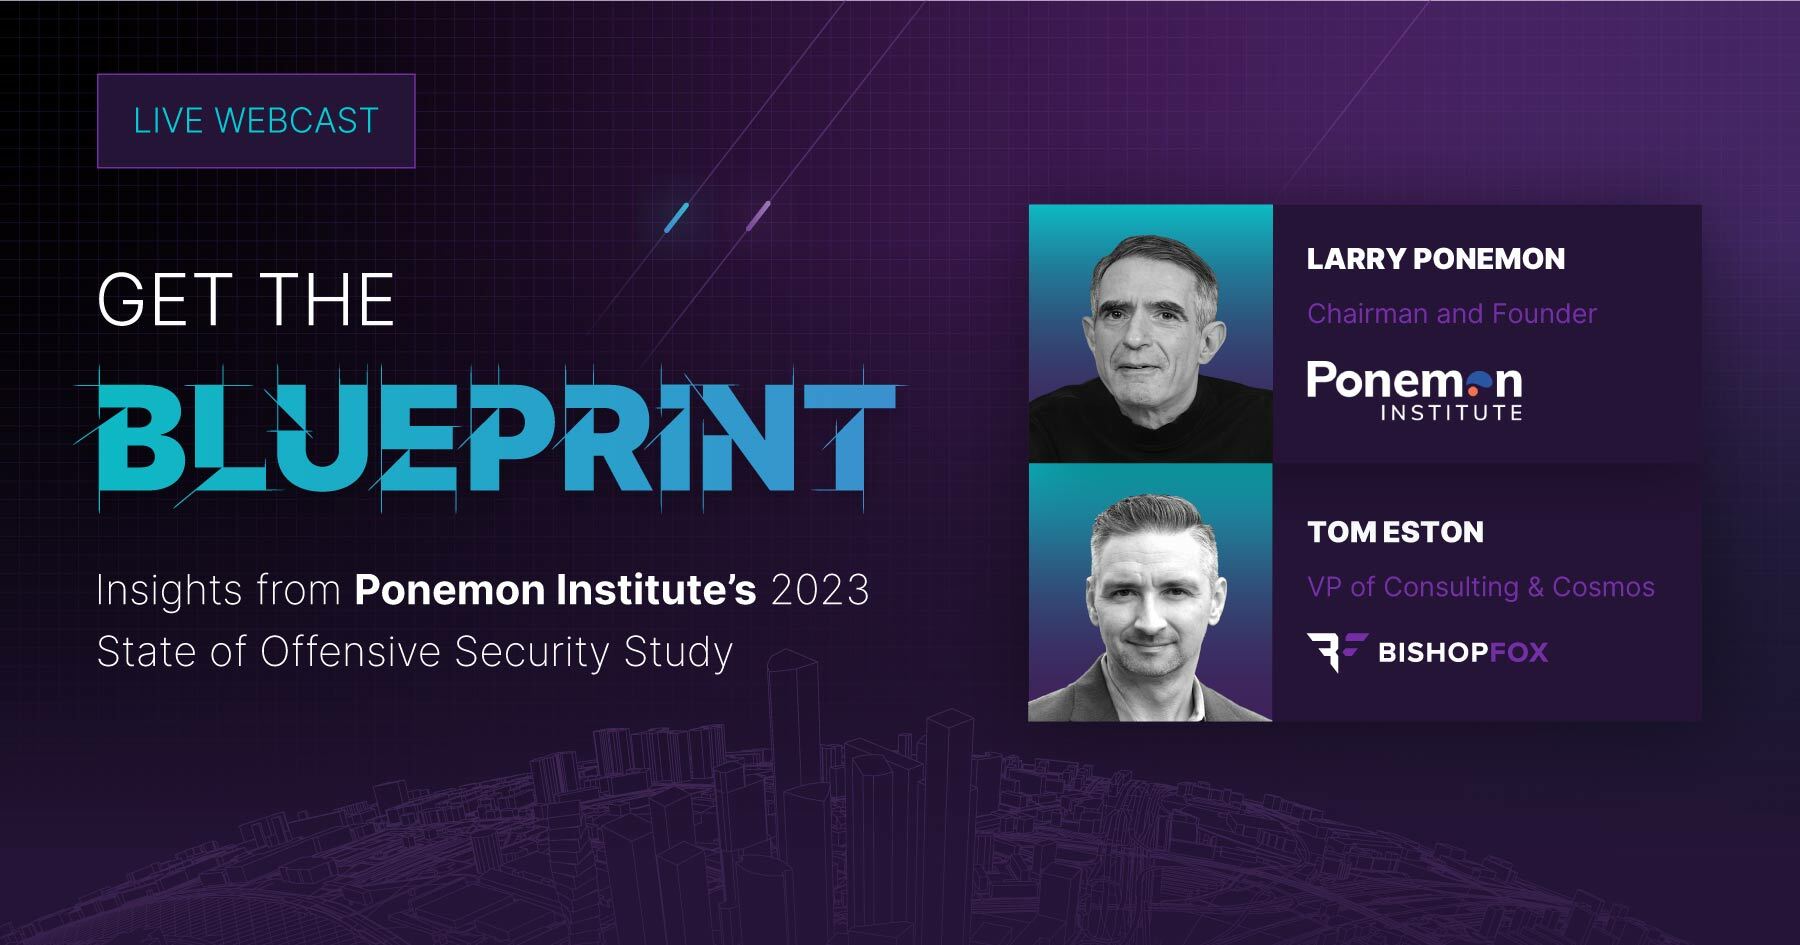 Get the Blueprint Ponemon Institute webcast with headshots of Larry Ponemon and Tom Eston.